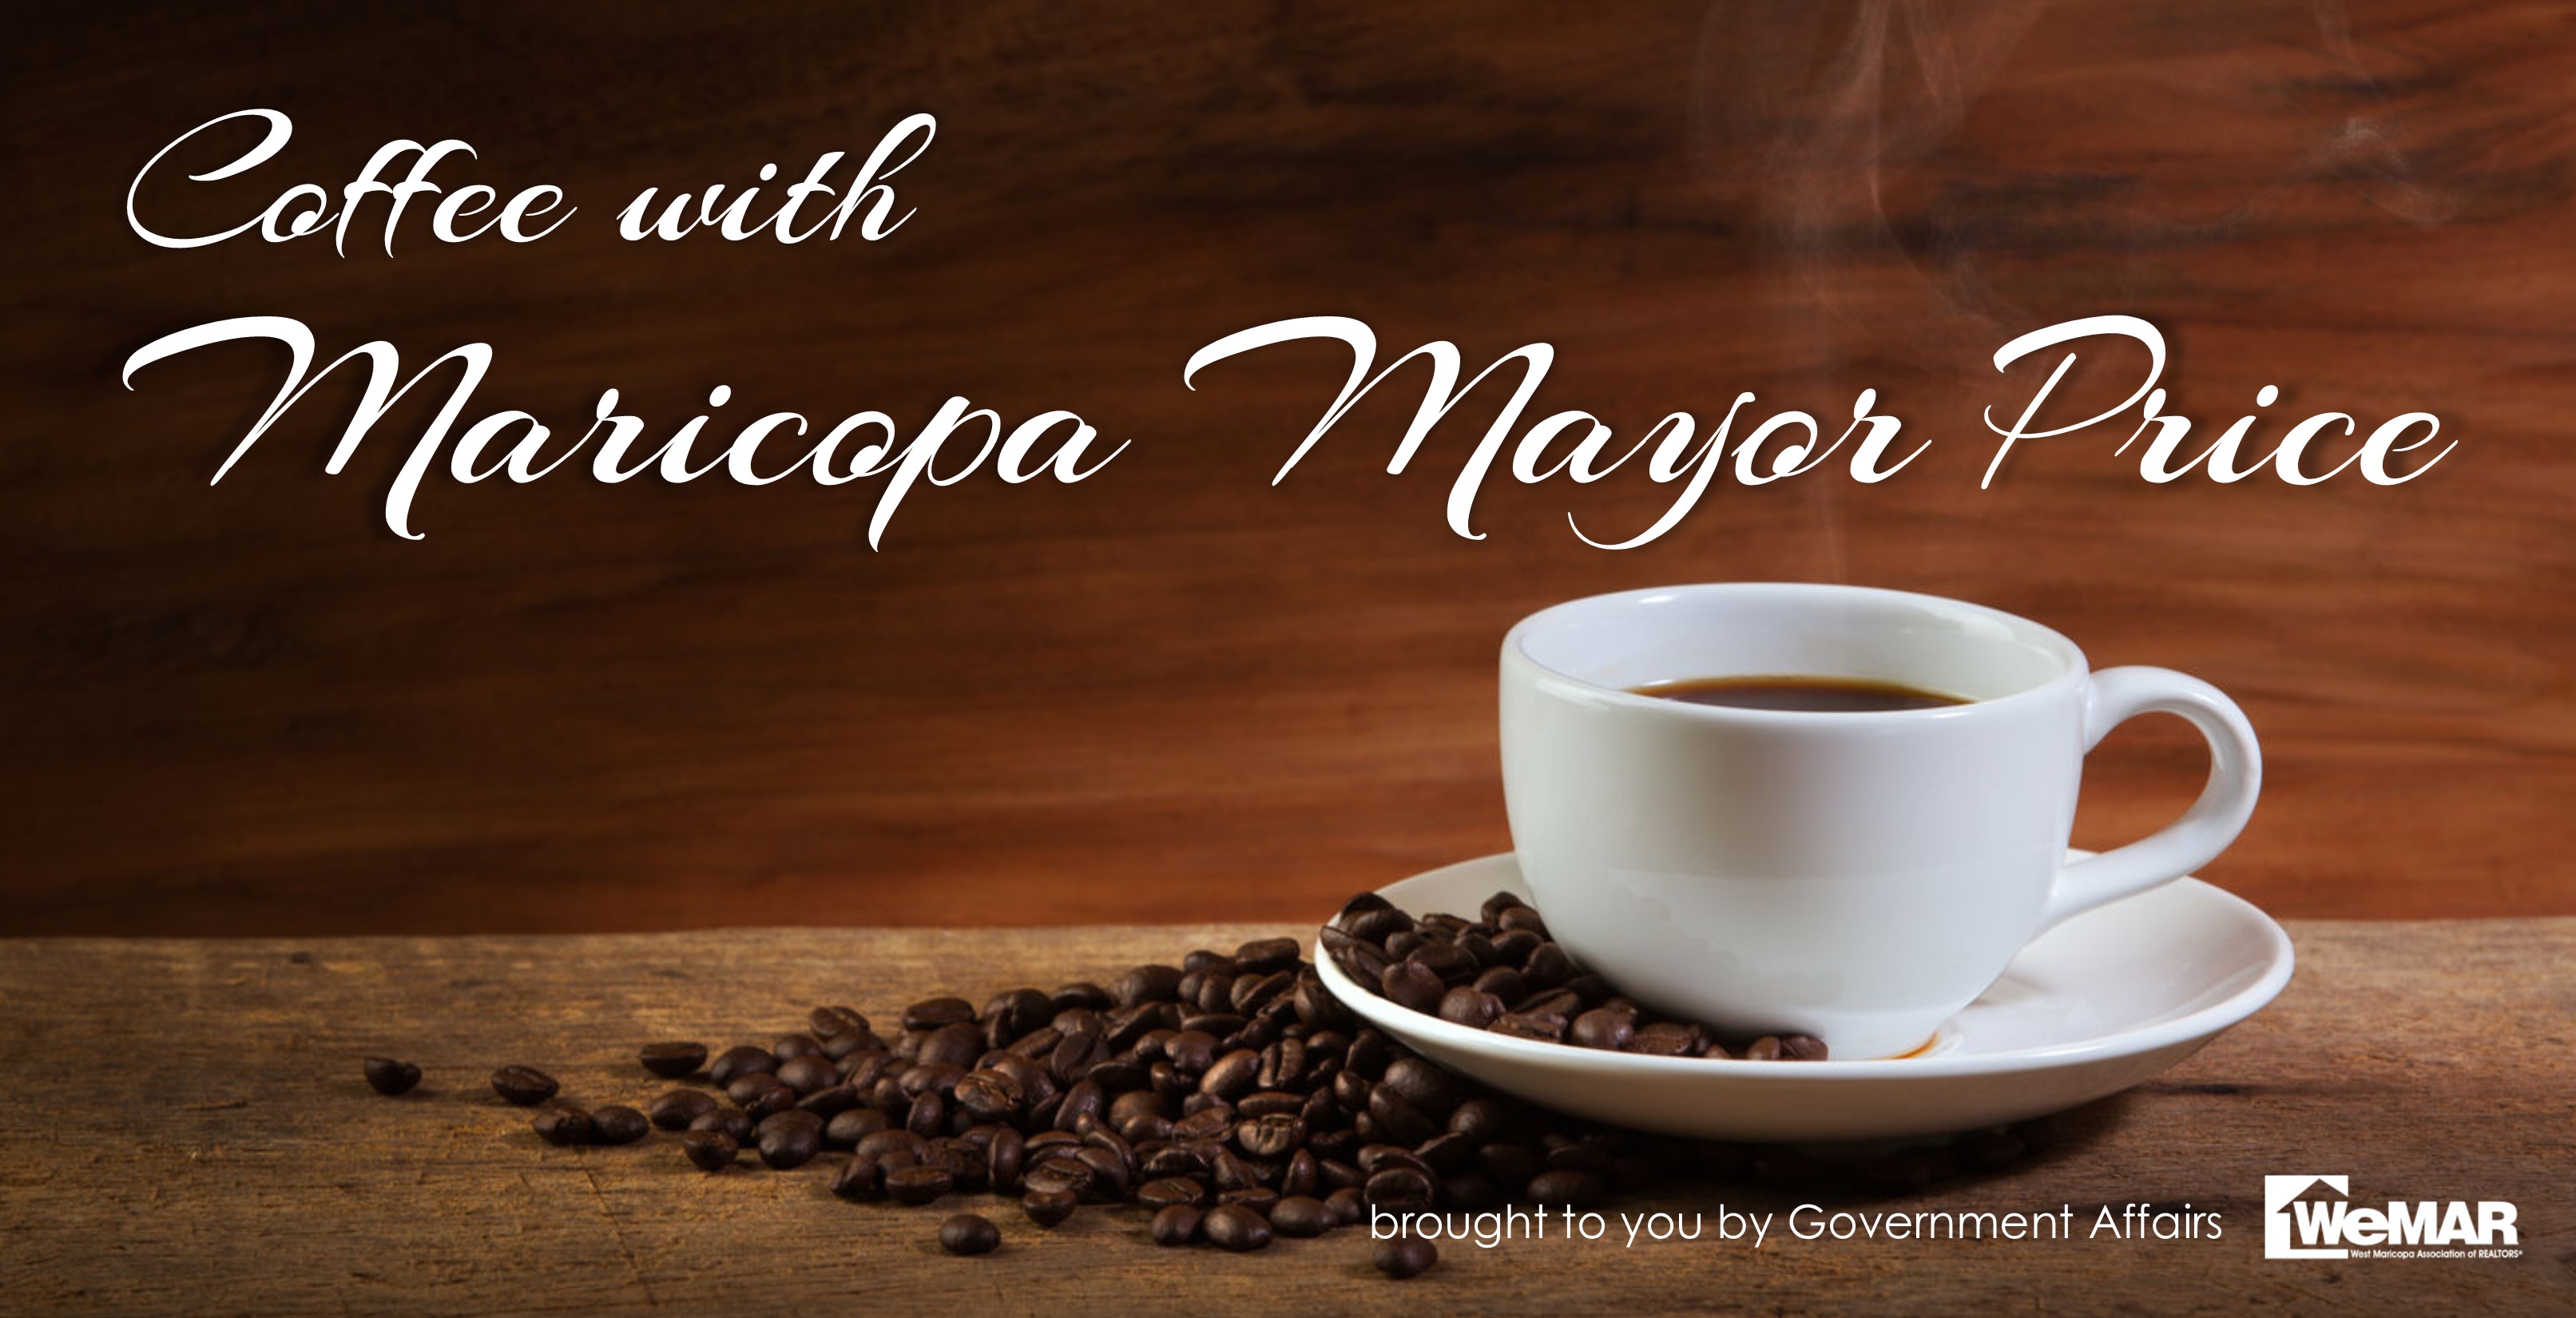 Coffee With Maricopa Mayor Price Government Affairs